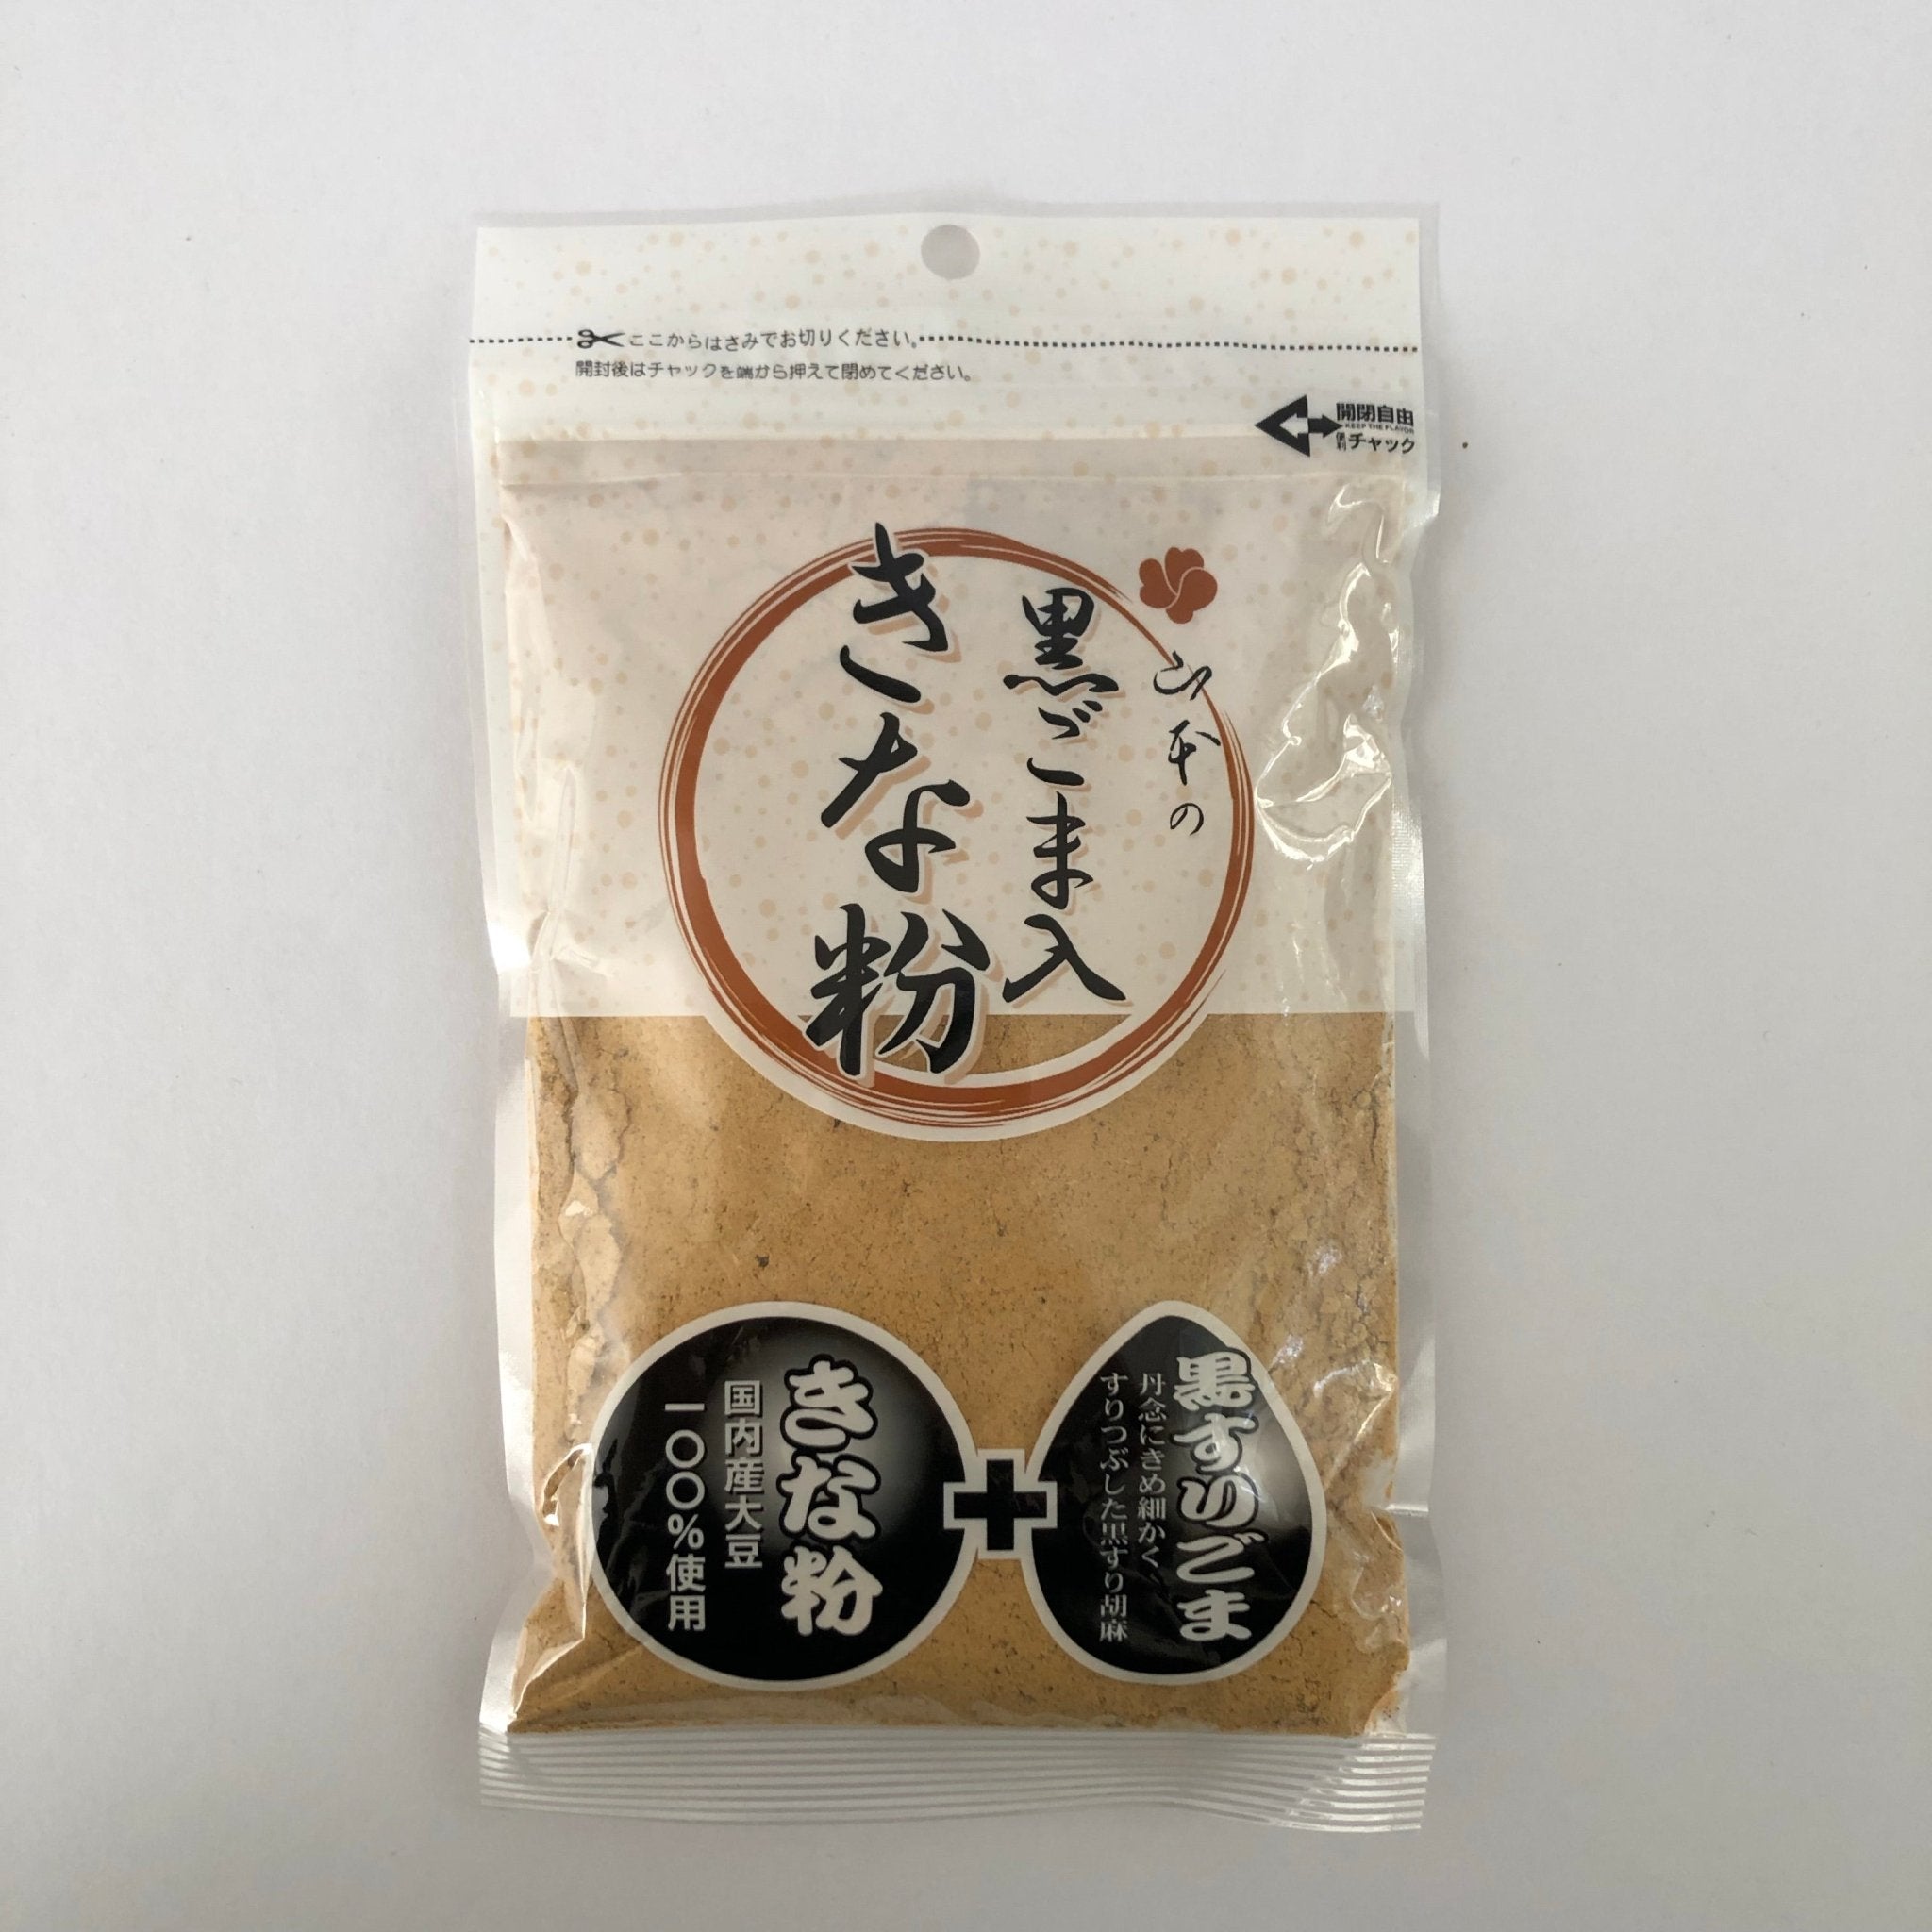 Kinako Soybean flour with Black Sesame 黒ごま入 きな粉